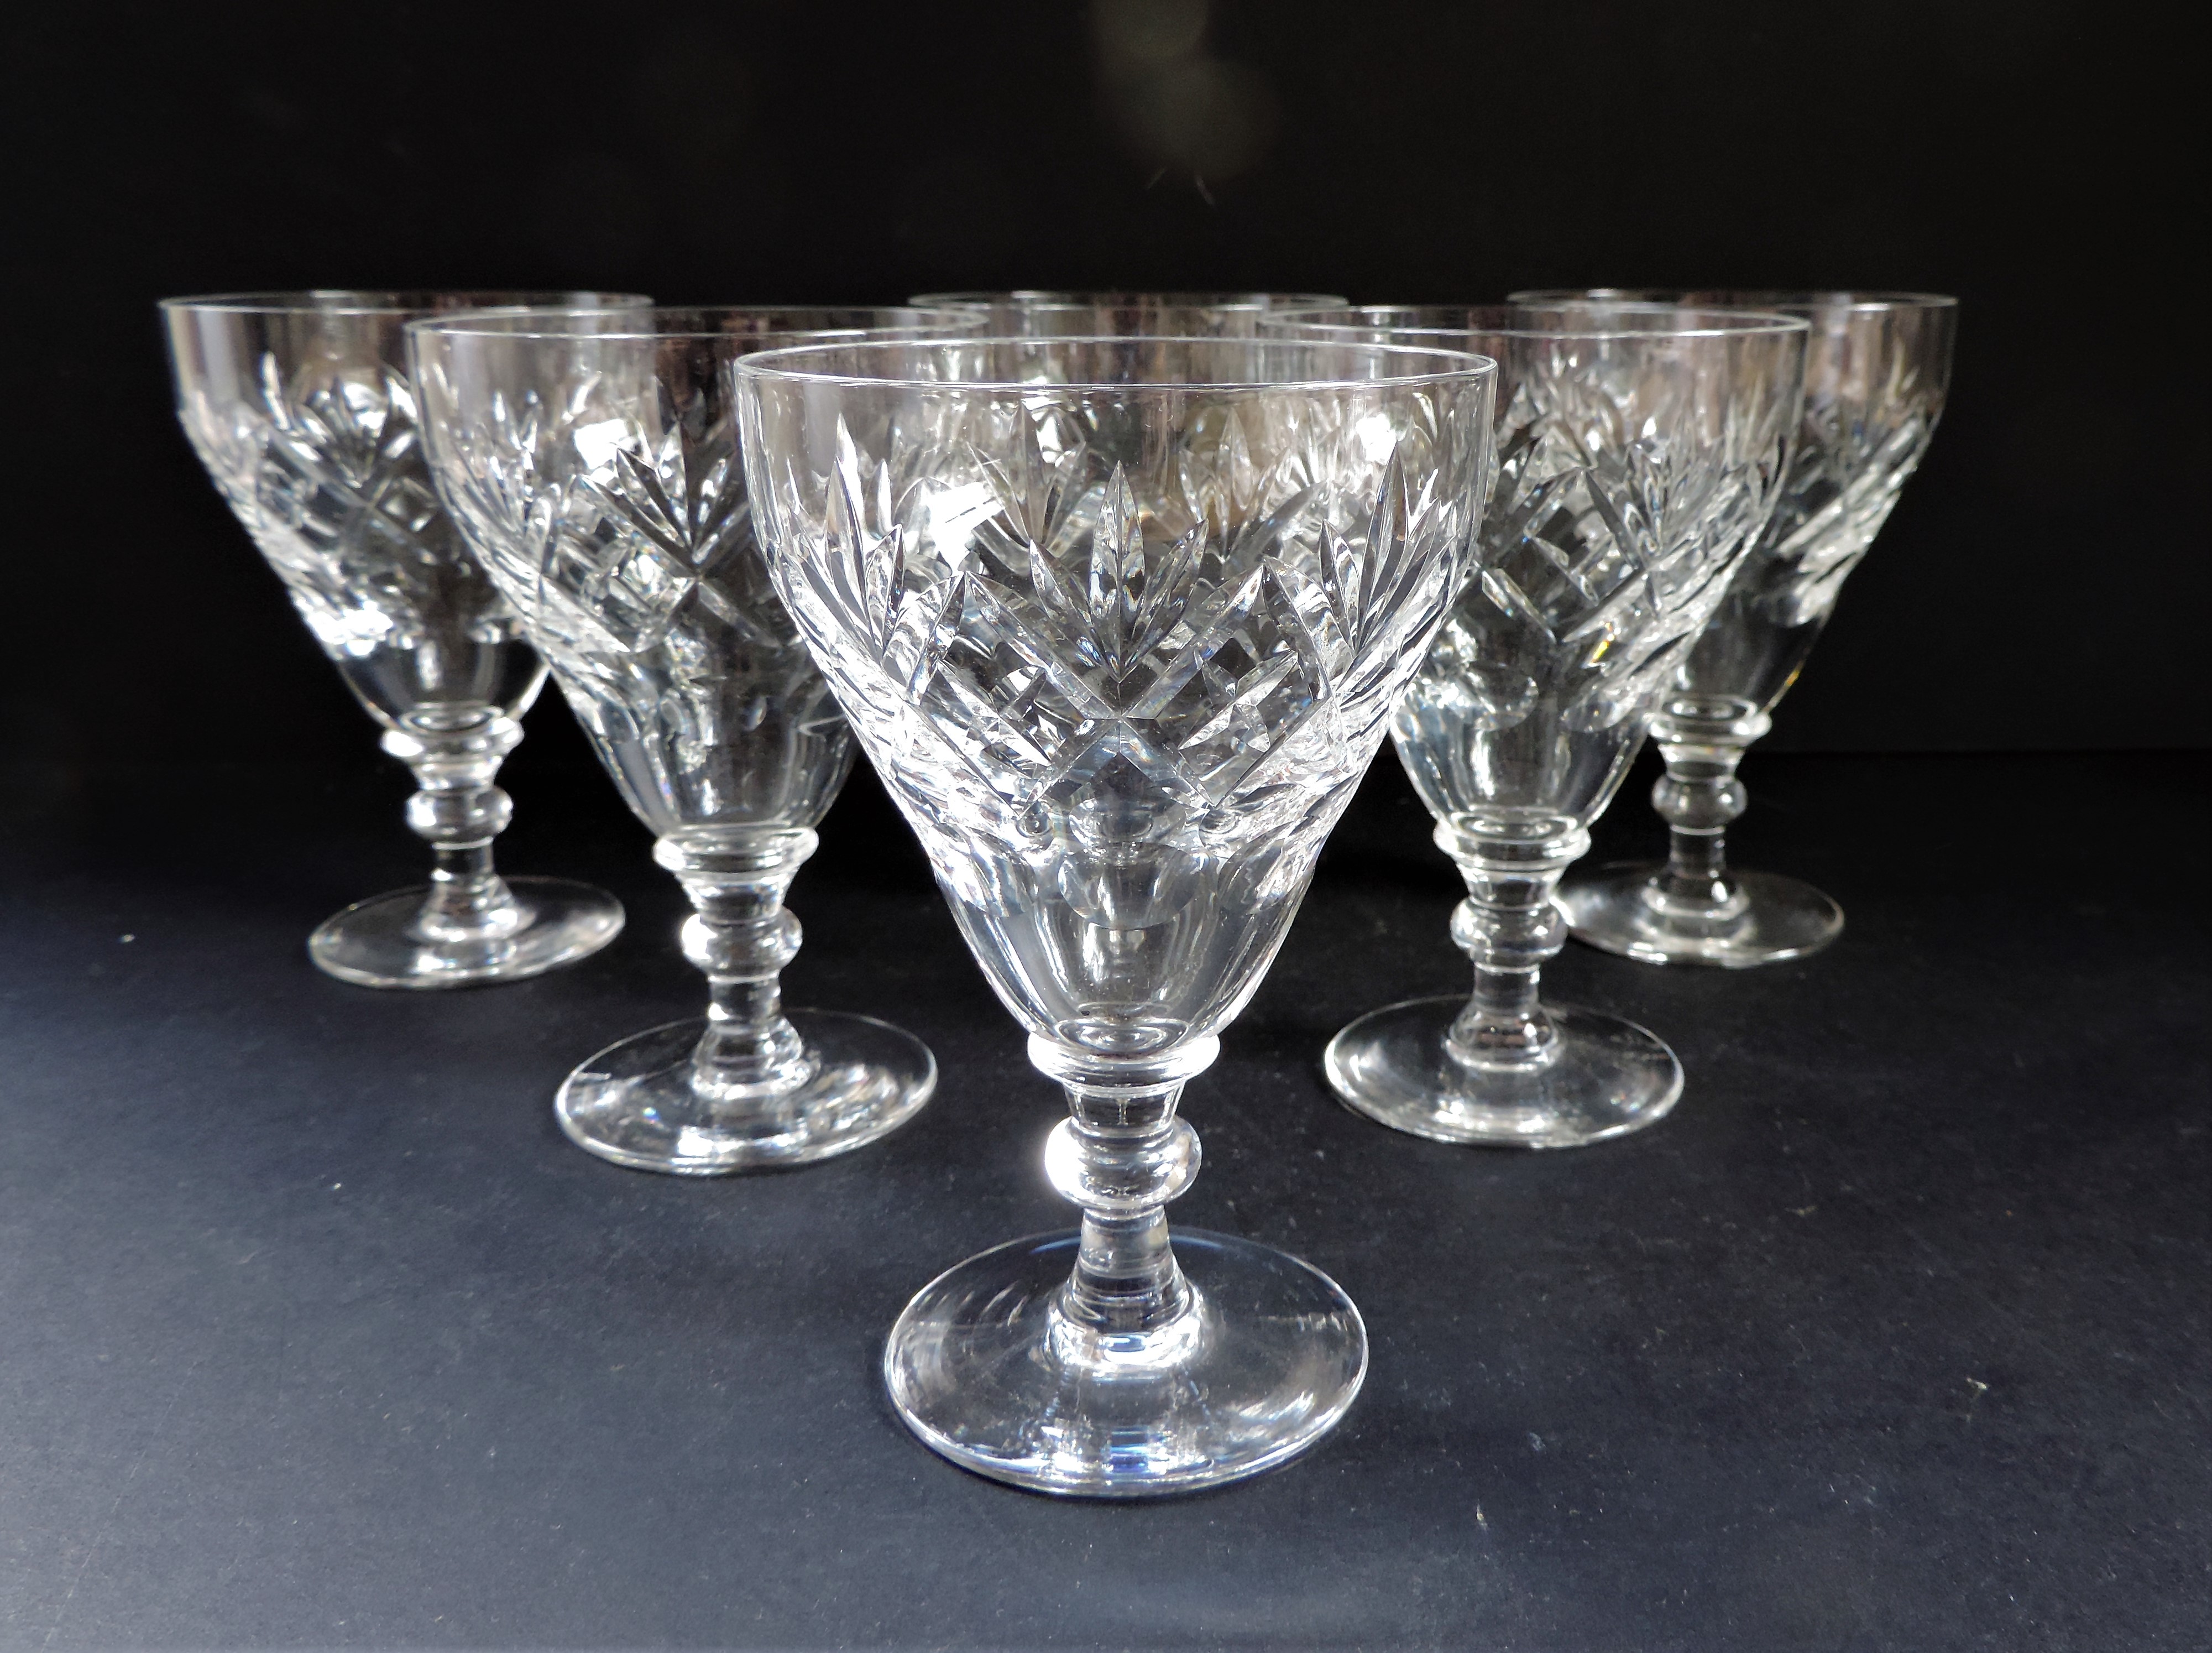 Vintage Crystal Wine Glasses Matching Set of 6